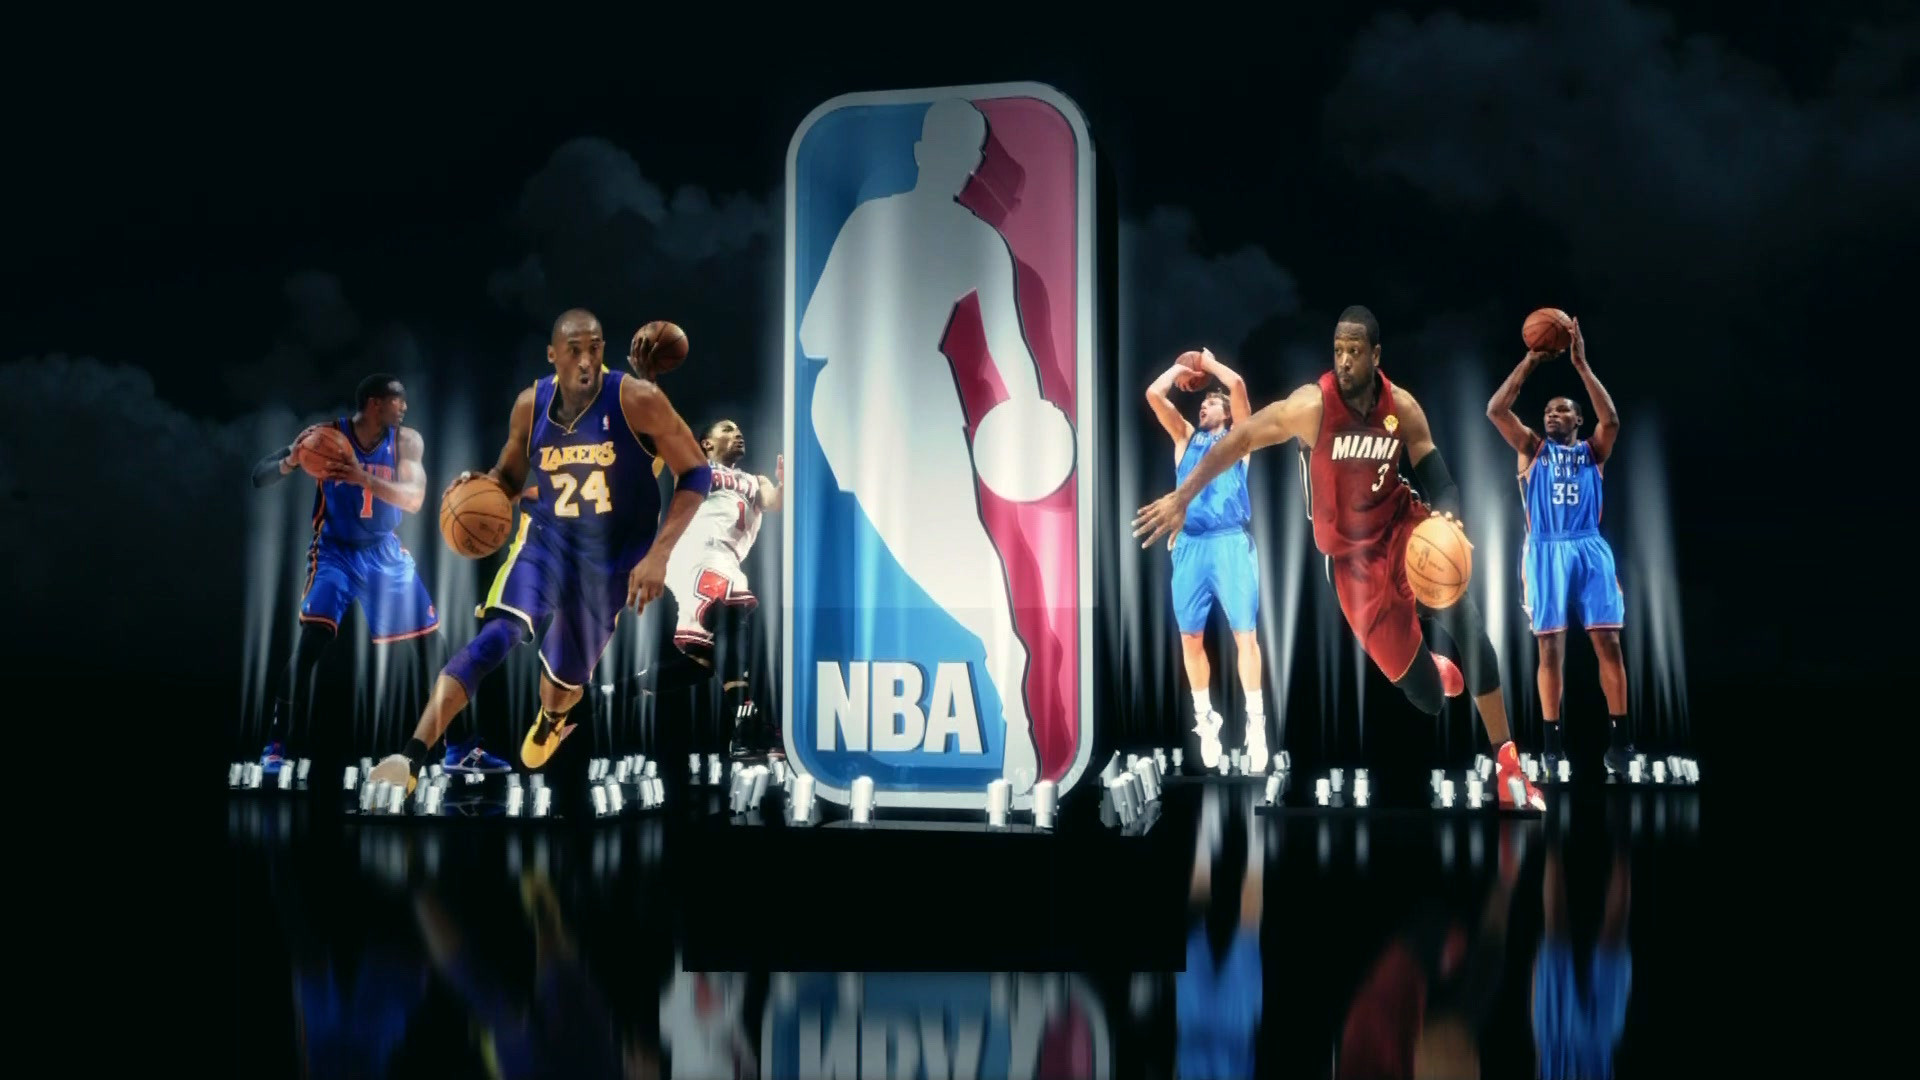 NBA Basketball Wallpaper 2018 (63+ images) Damian Lillard 2013 Wallpaper